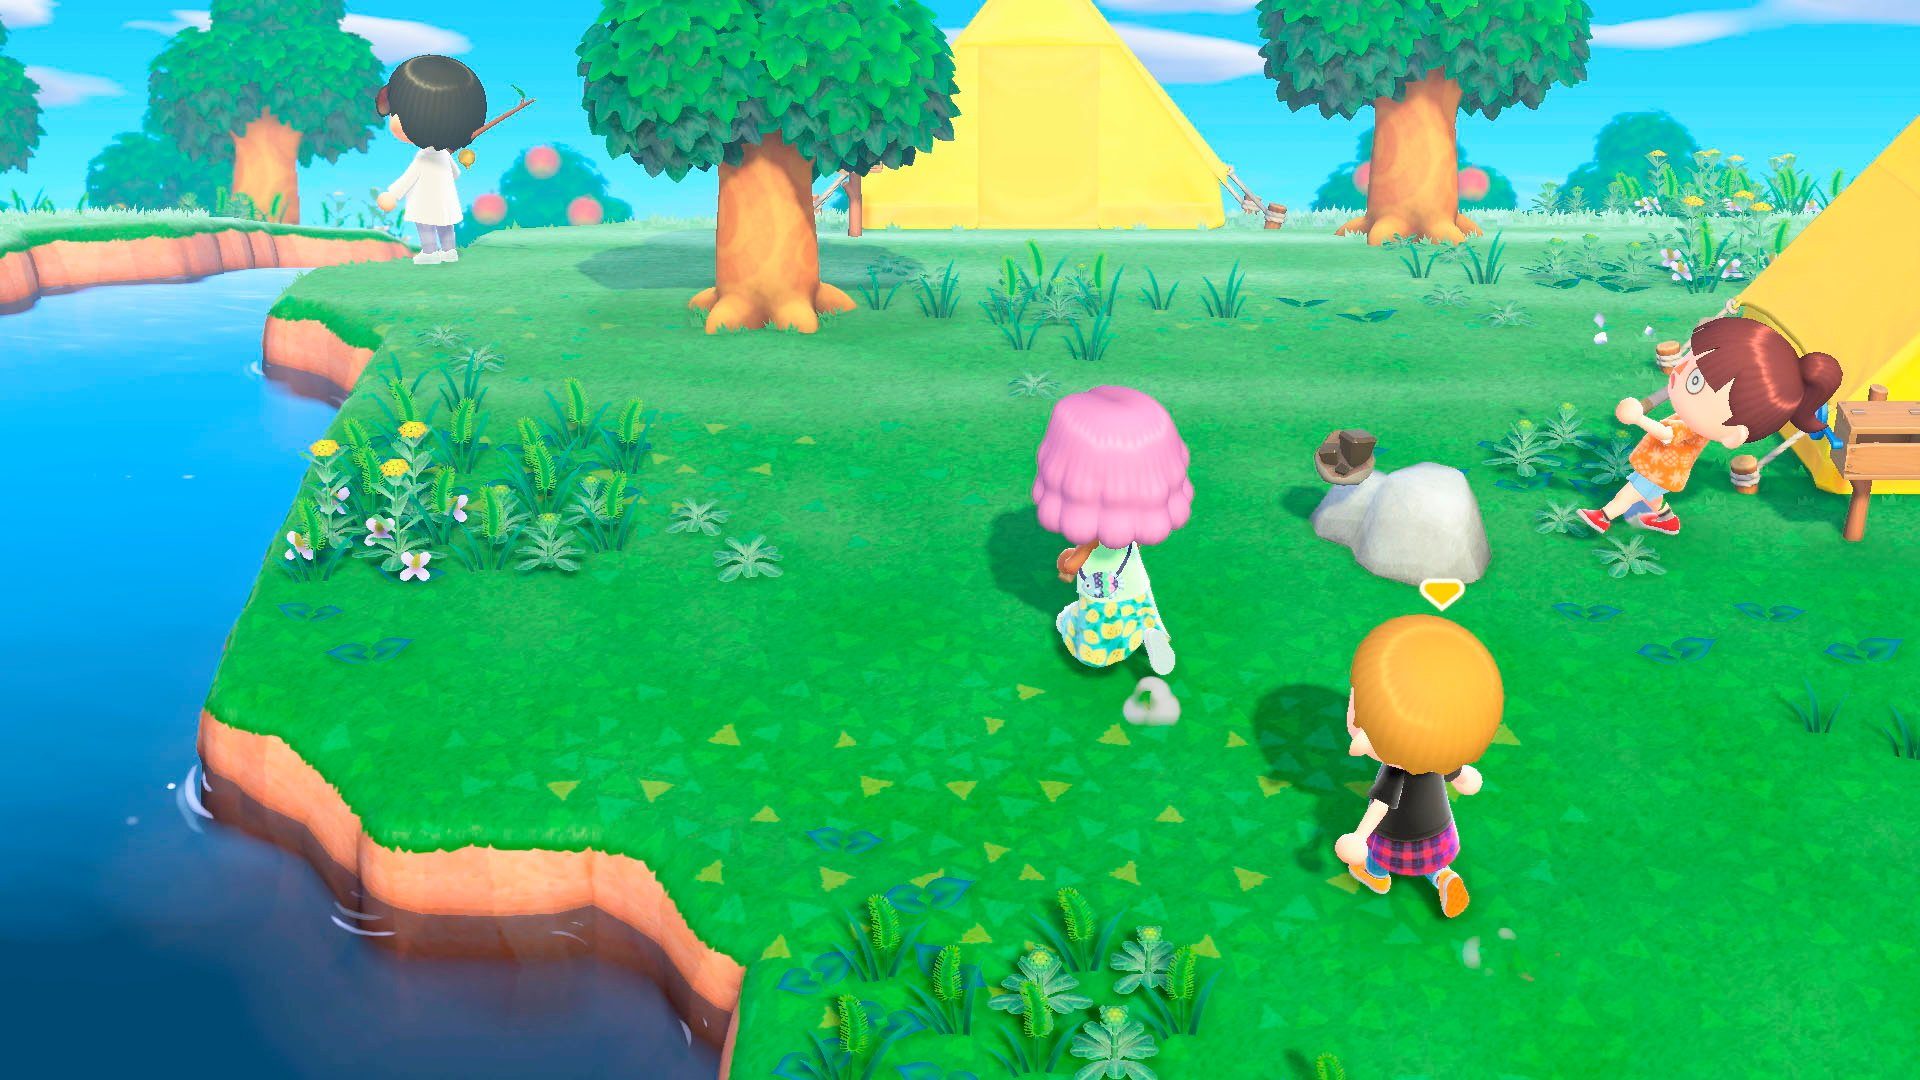 Animal Crossing New Nintendo Switch Horizons